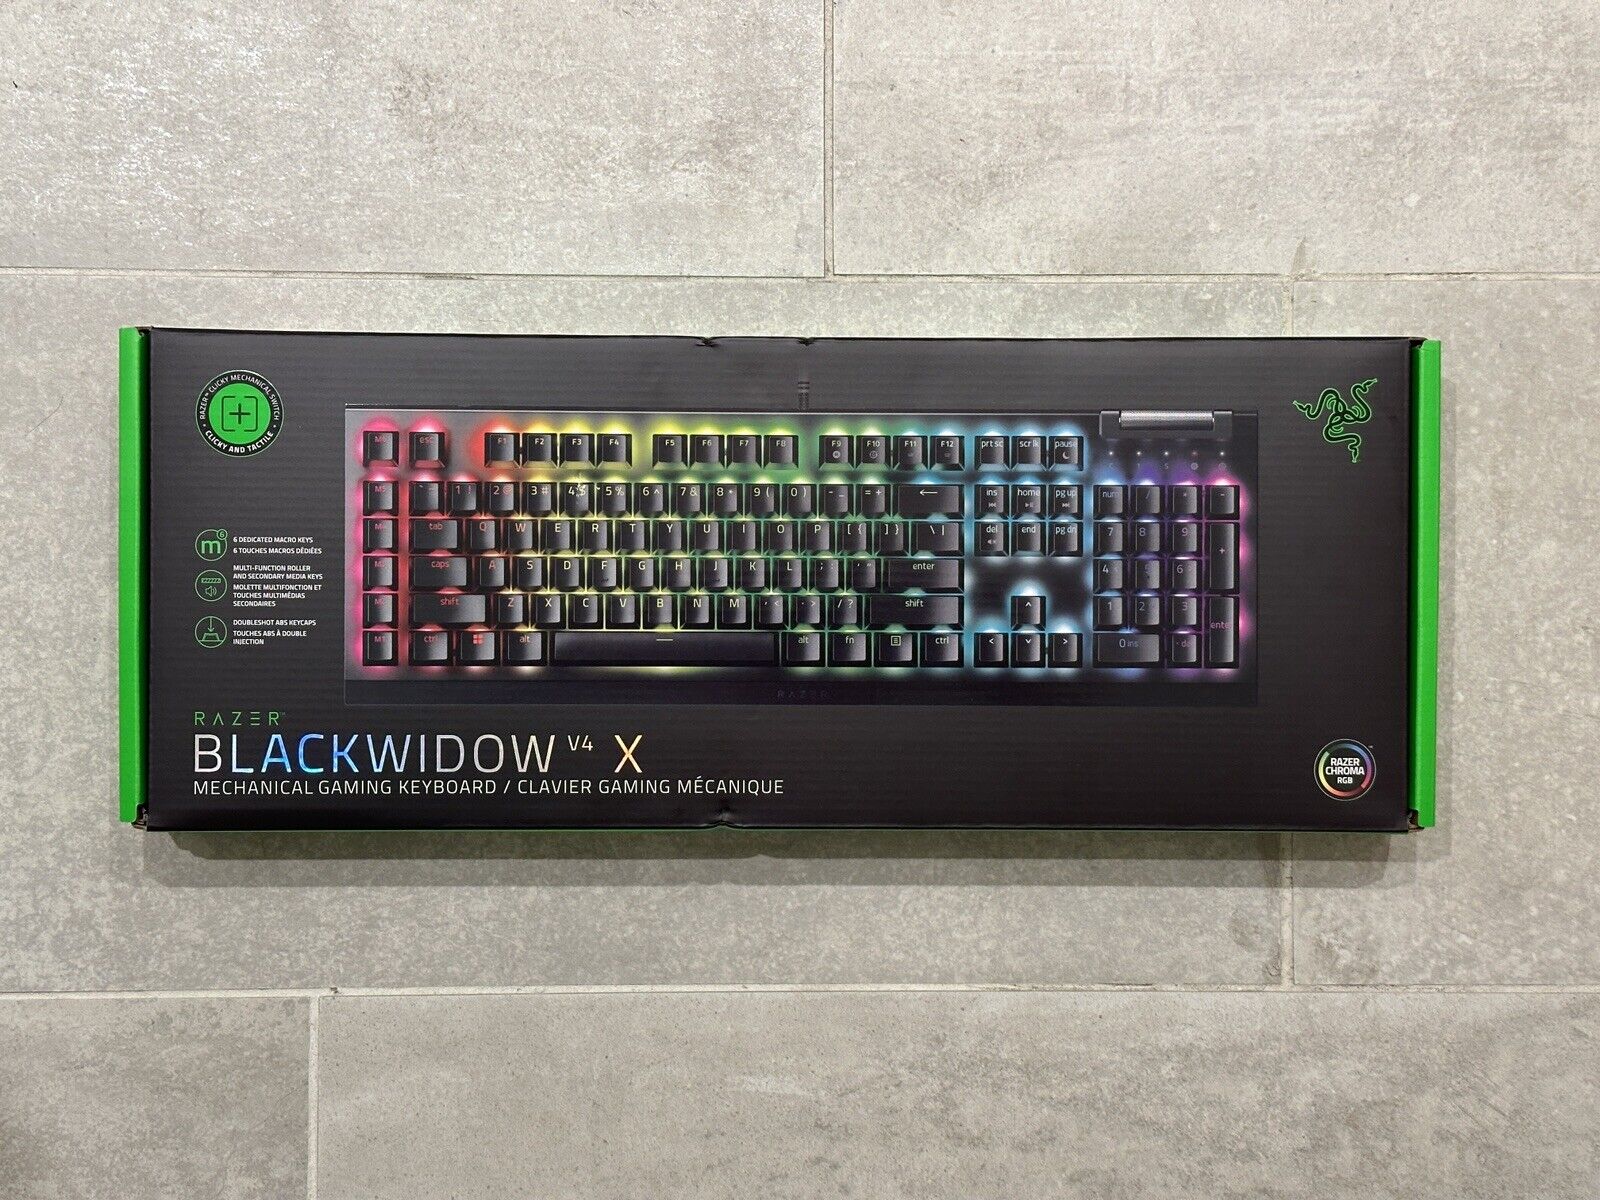 Razer BlackWidow V4 X Mechanical Gaming Keyboard w/ Green Switches & Chroma RGB